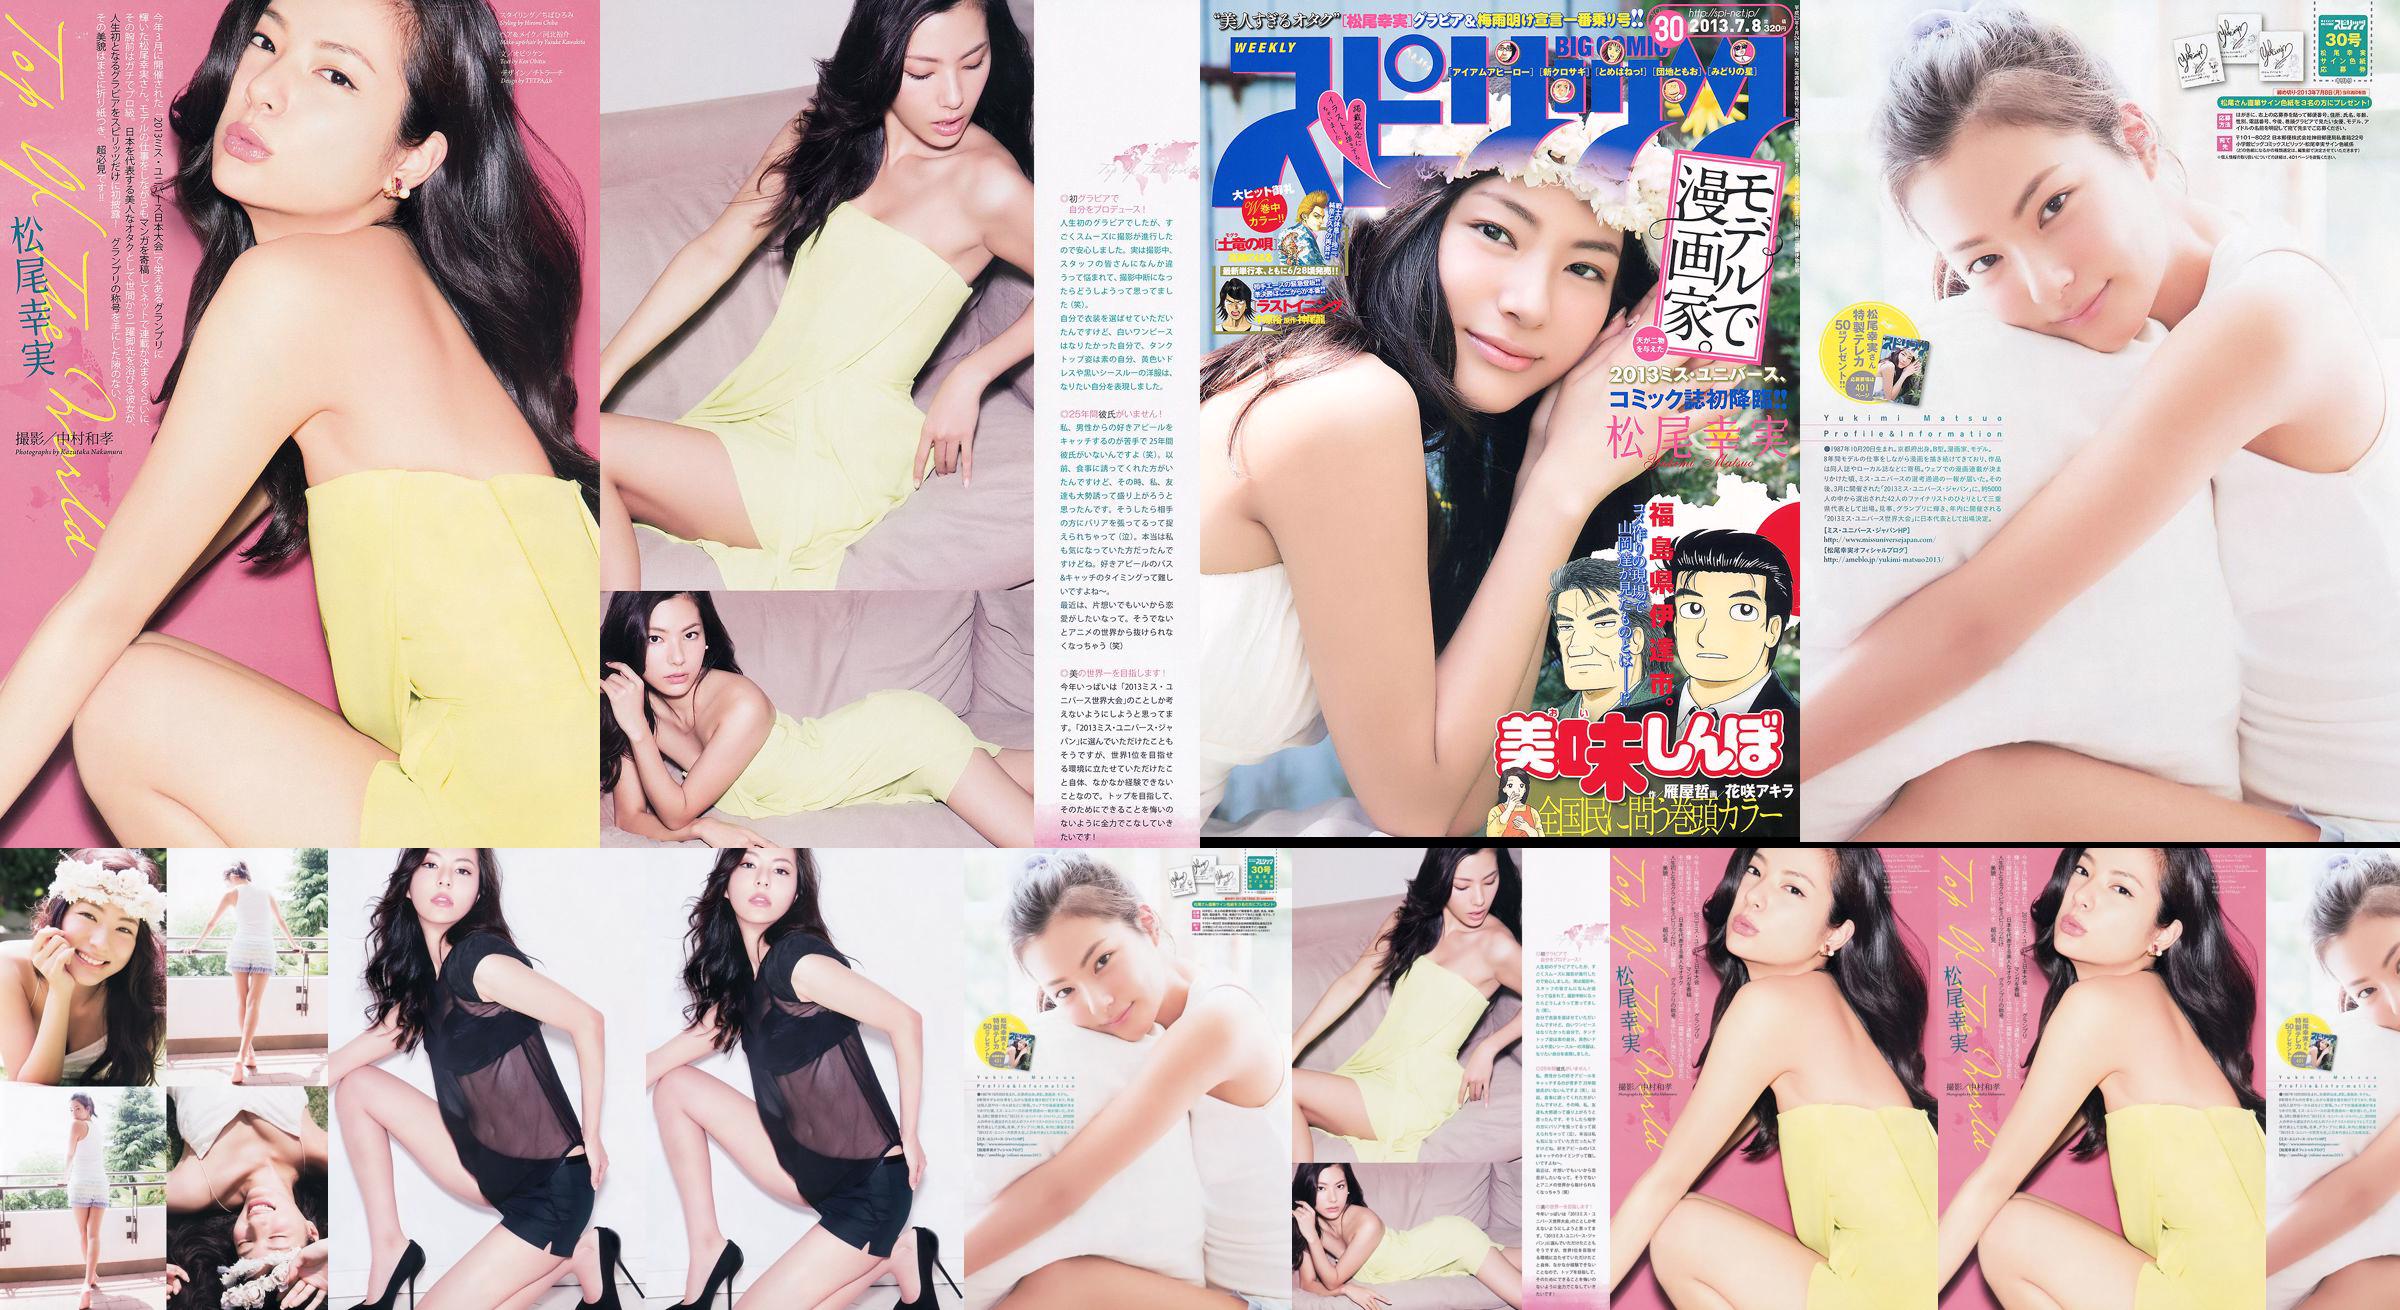 [Semangat Komik Besar Mingguan] Komi Matsuo 2013 Majalah Foto No.30 No.18ab11 Halaman 1